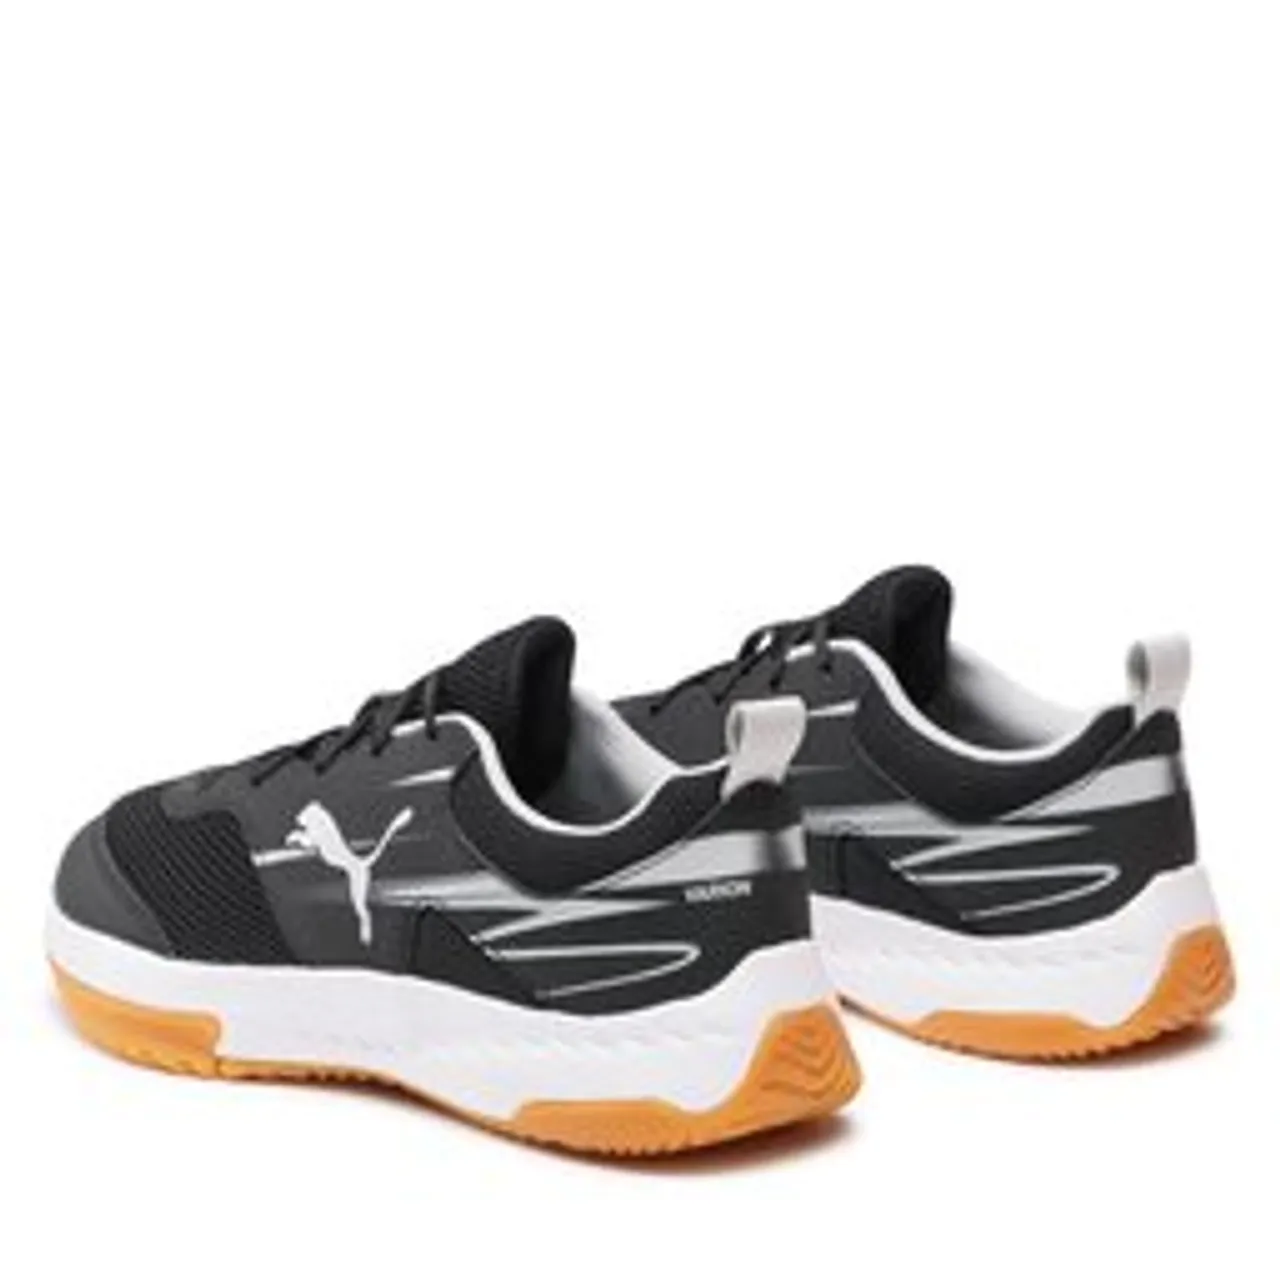 Schuhe Puma Varion II 107342 01 Black